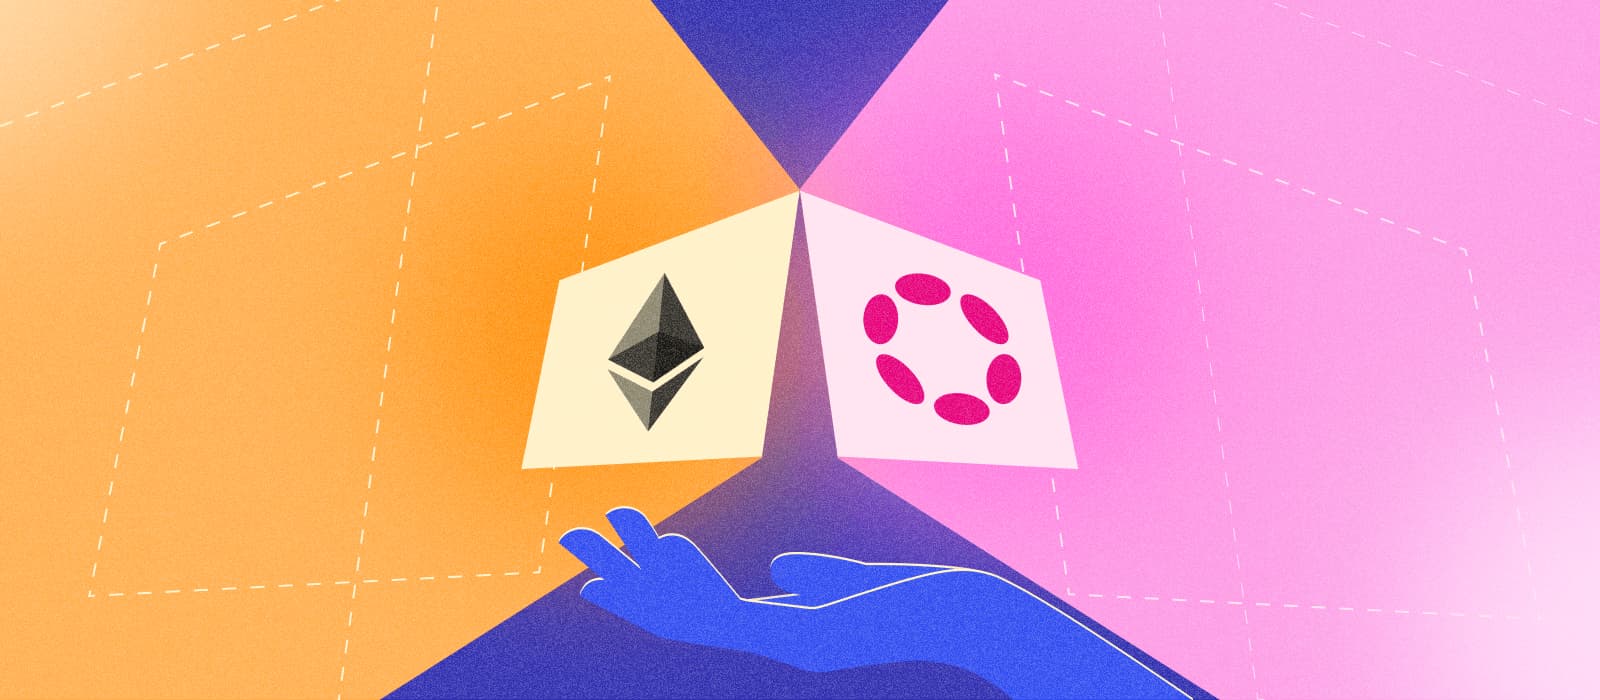 Logos of Ethereum and Polkadot